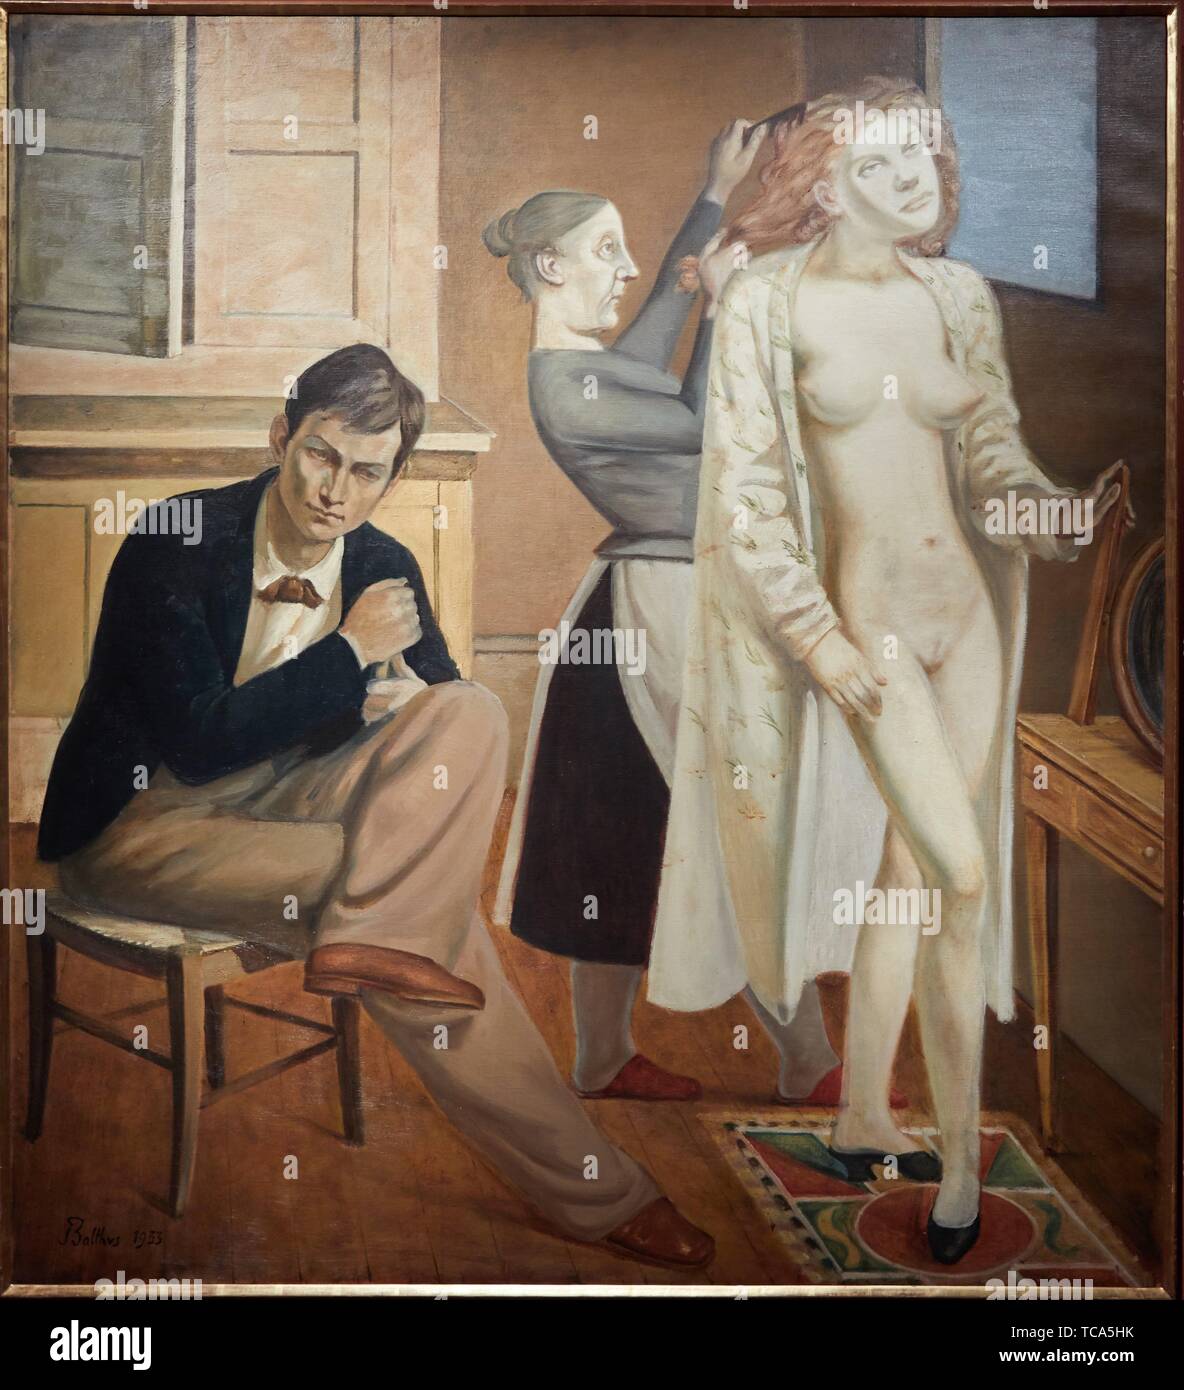 '''Cathy s'habiller'', 1933, Balthus, Thyssen Bornemisza, Madrid, Spain, Europe Banque D'Images